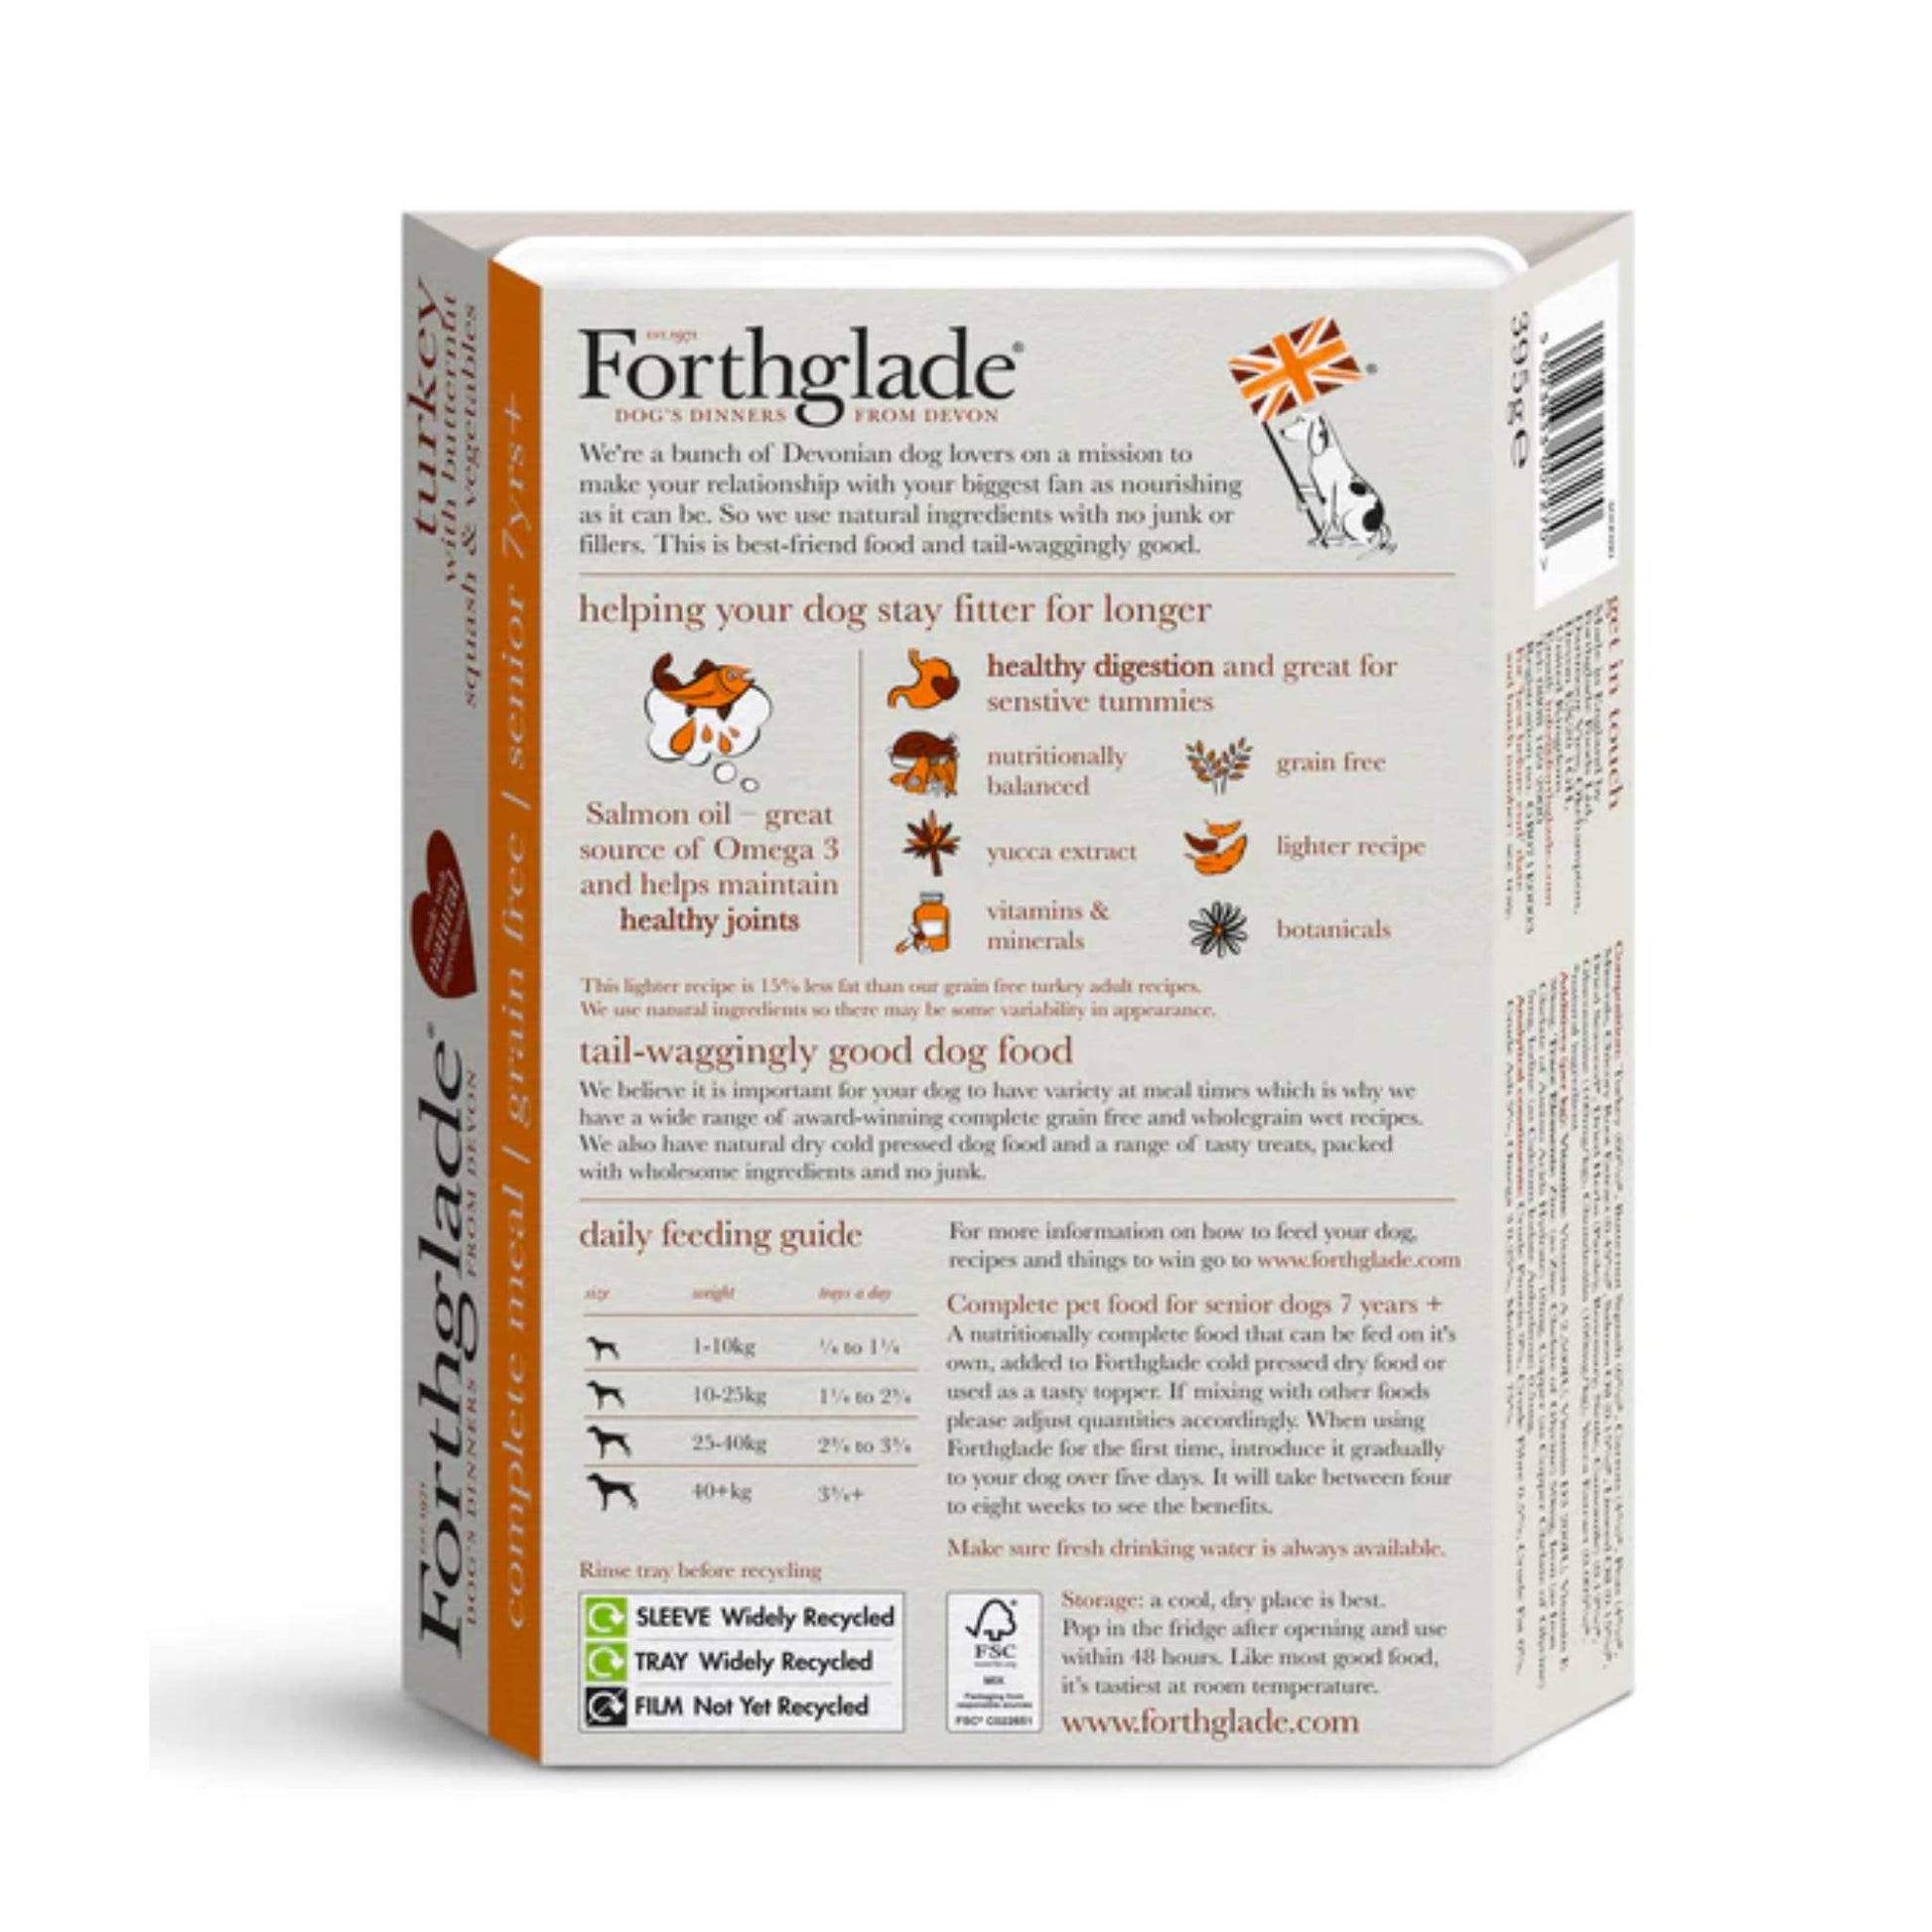 Forthglade Senior Turkey ingredients and feeding guide. 